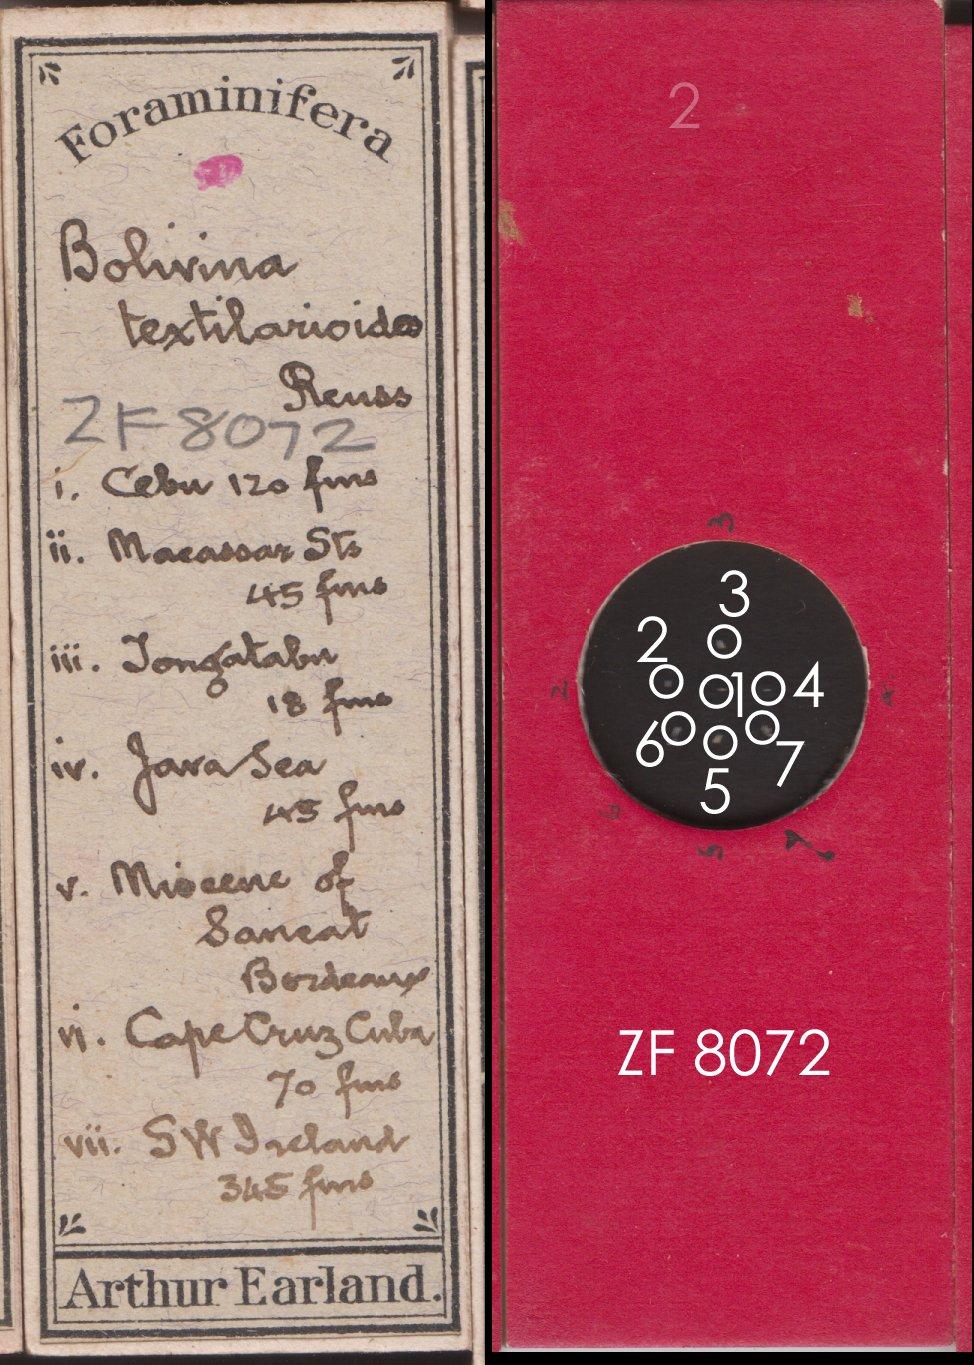 To NHMUK collection (Bolivina textilarioides Reuss, 1863; NHMUK:ecatalogue:9143289)